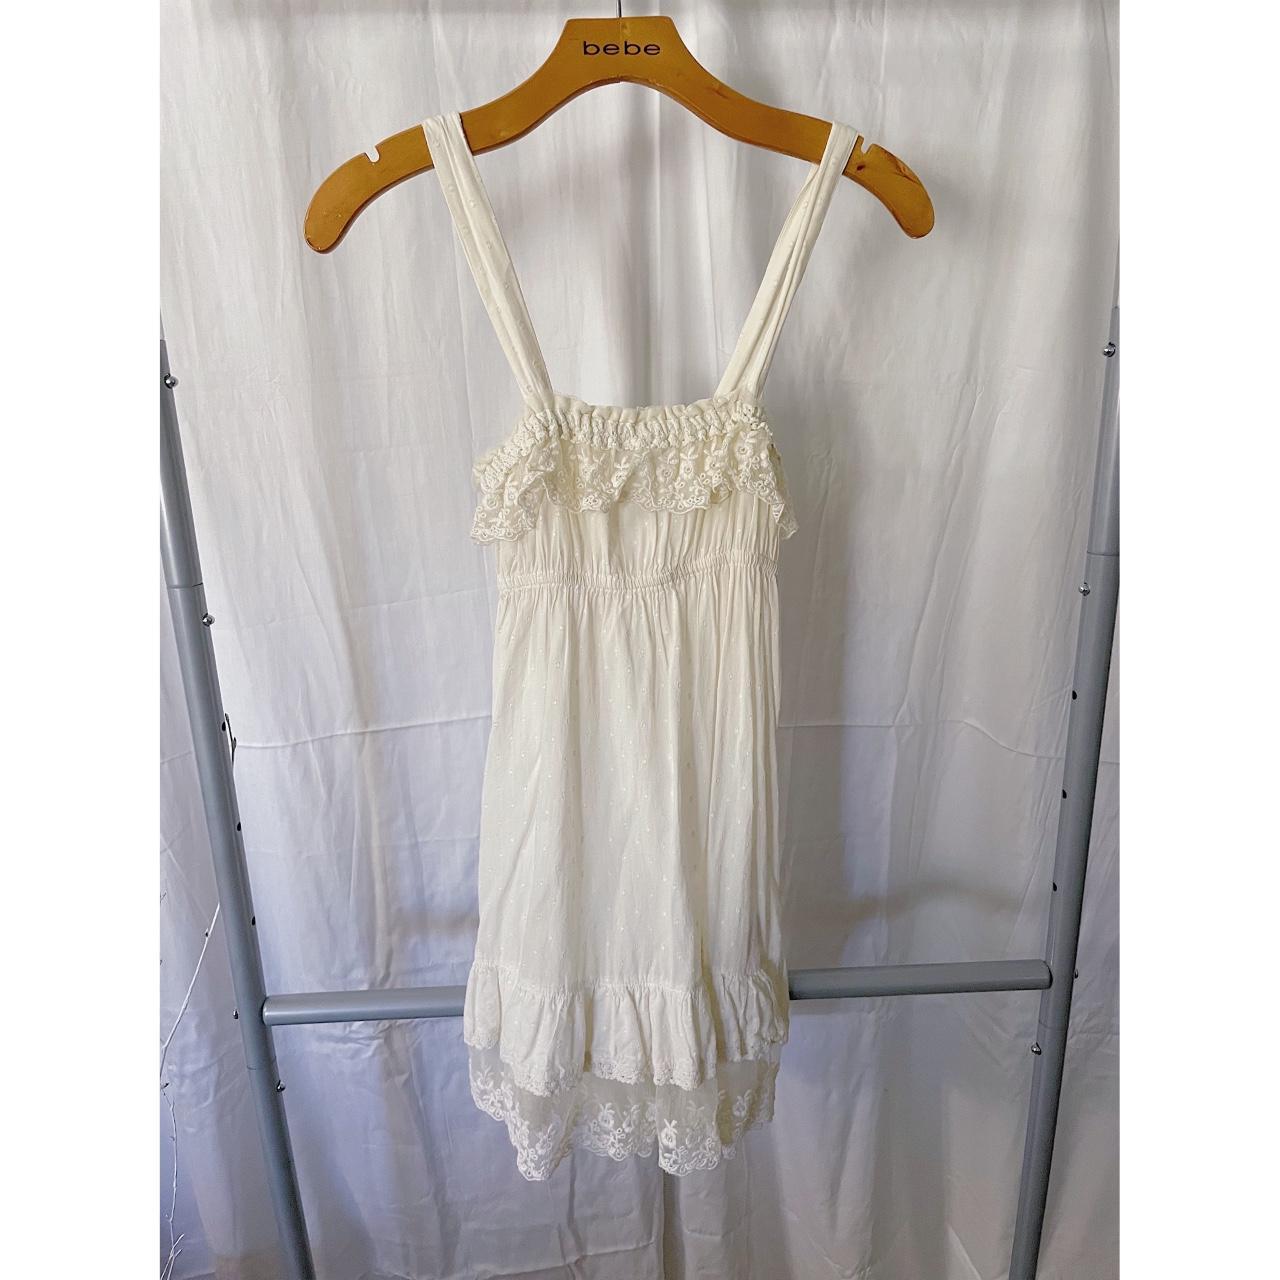 River Island Women's White and Cream Dress (2)